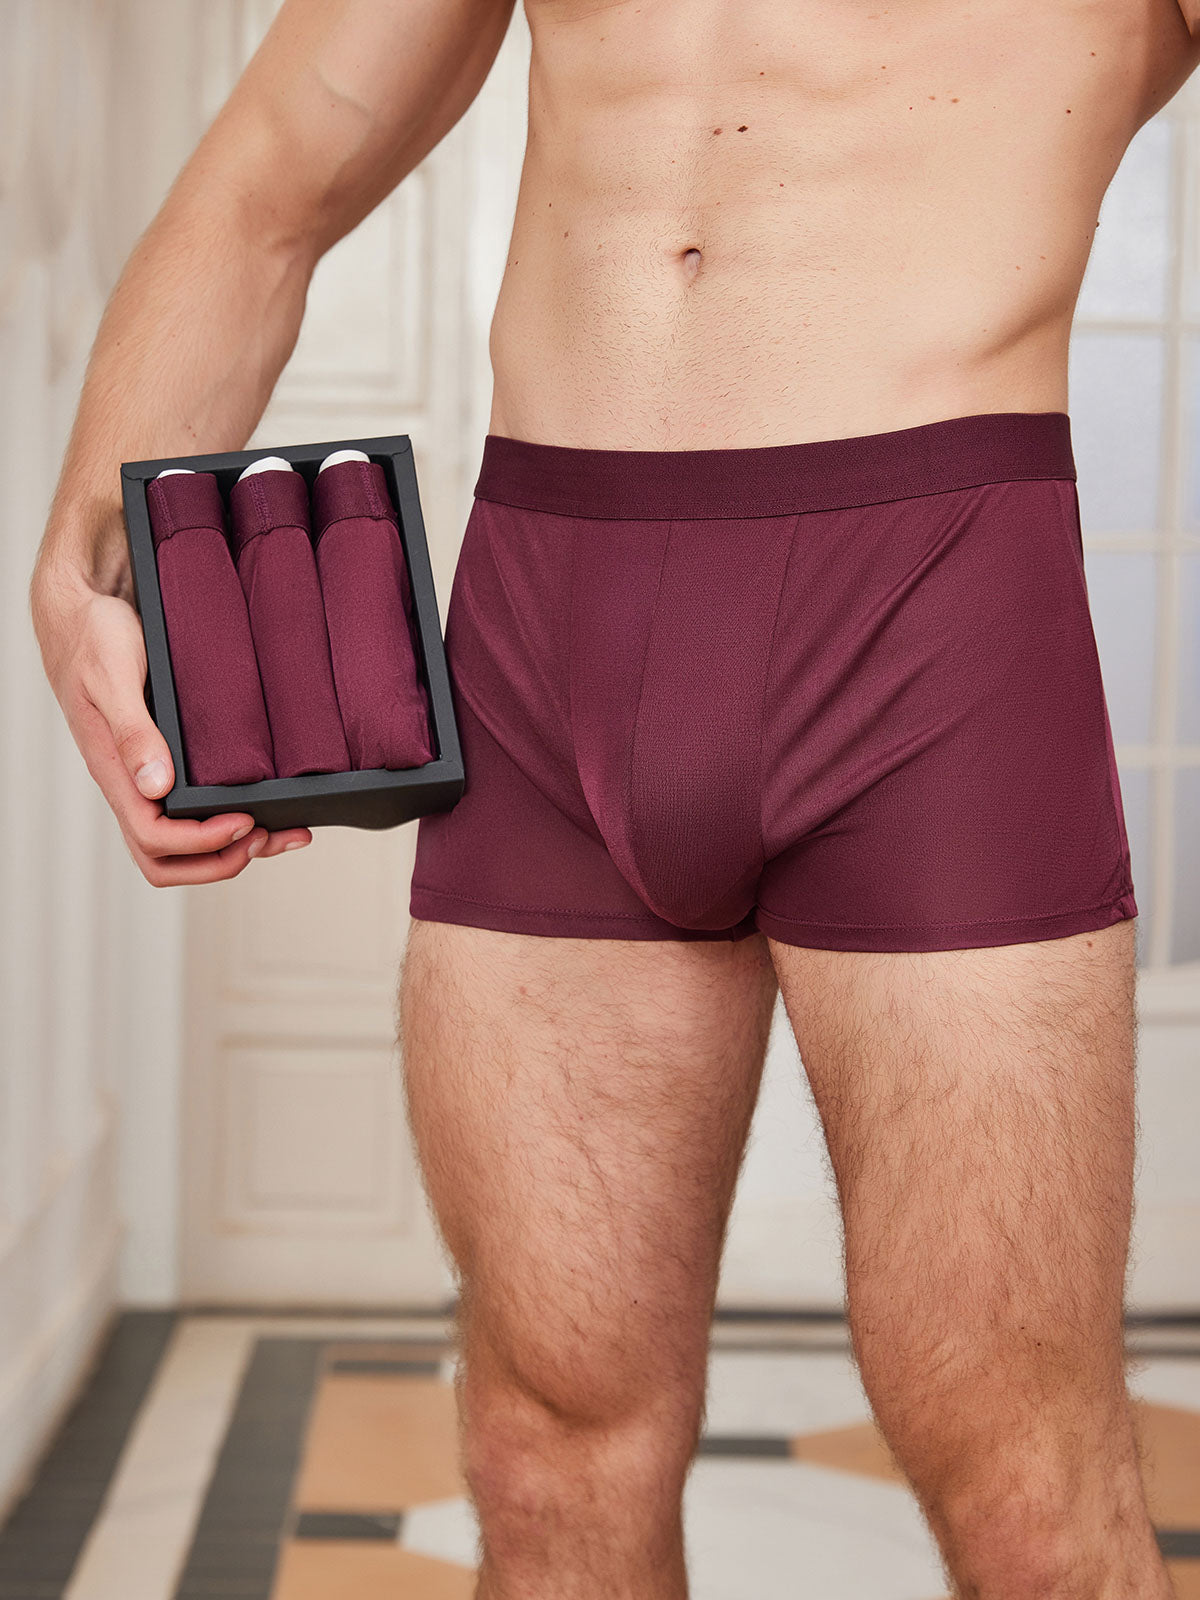 Silksilky Fly Opening Mens Silk Boxers Best Underwear for Men